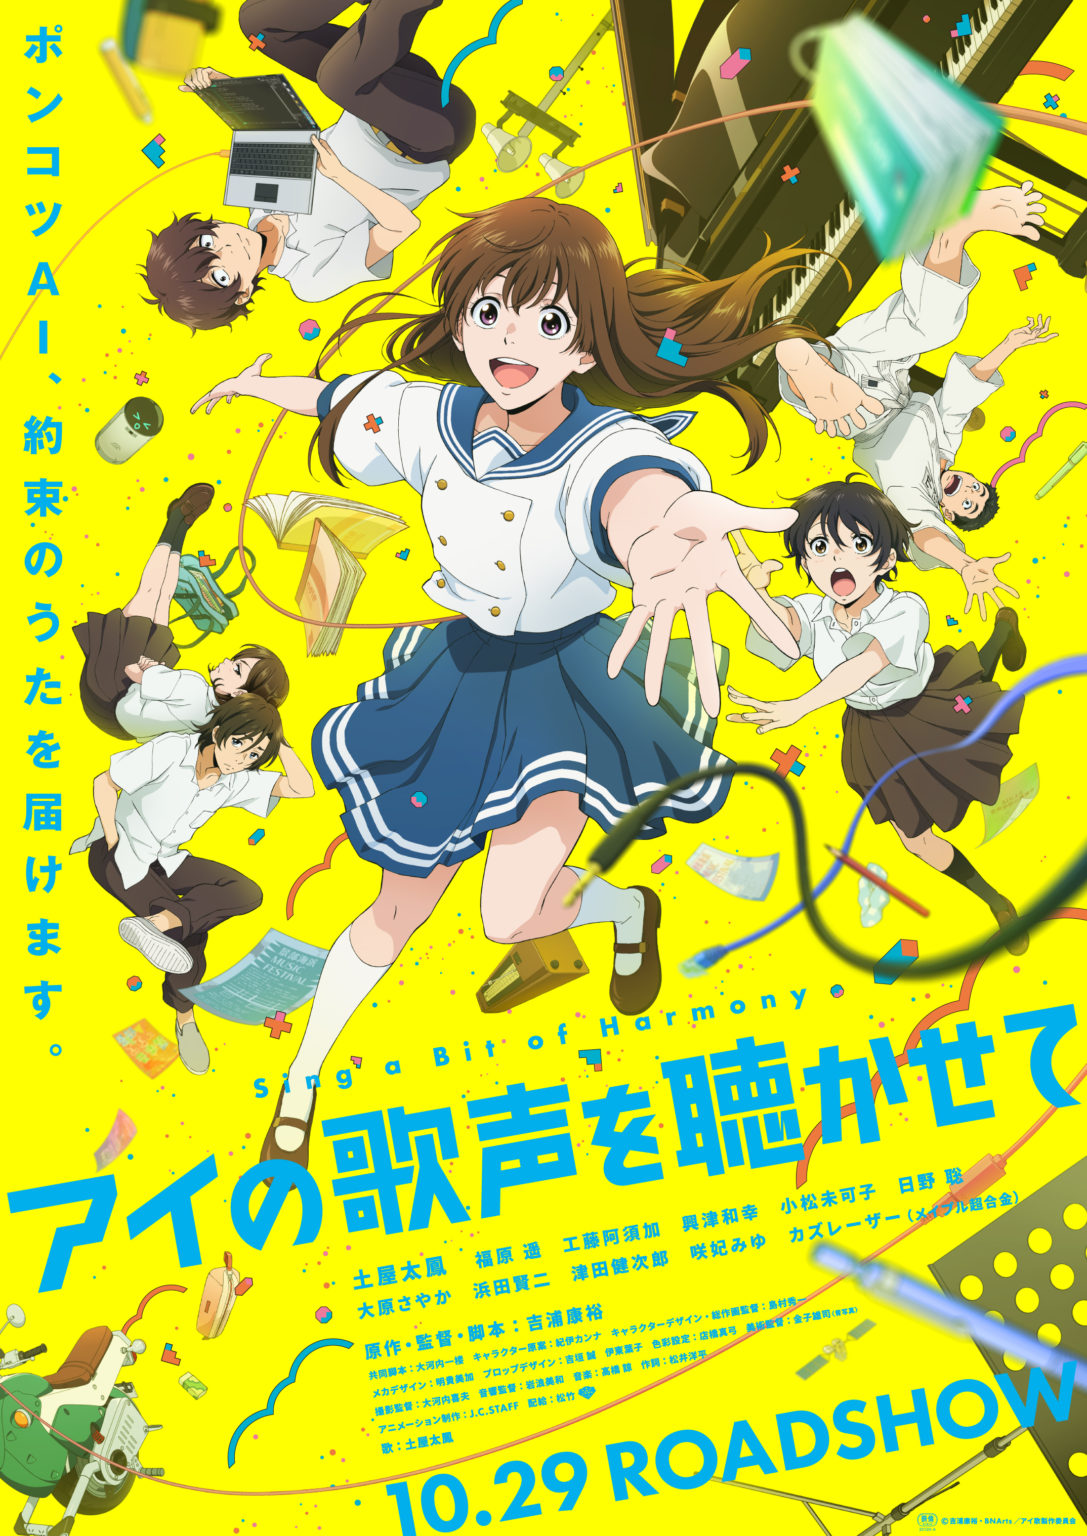 Anime 1087x1536 anime portrait display Japanese schoolgirl school uniform arms reaching schoolboys anime boys anime girls Sing a Bit of Harmony